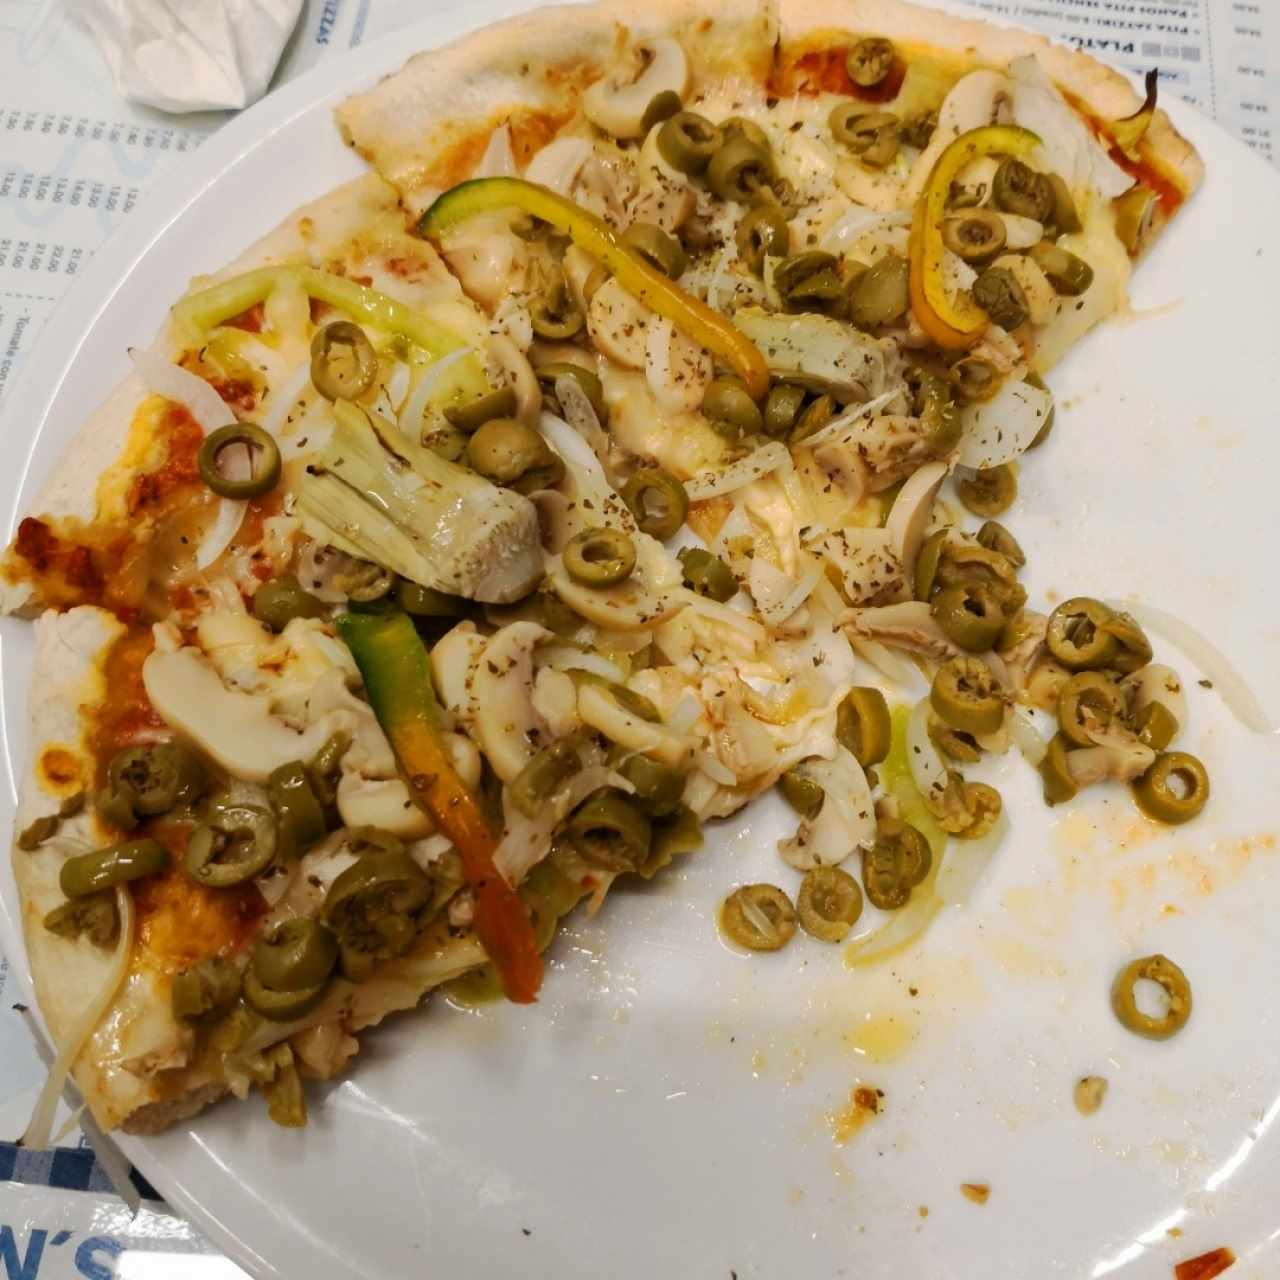 Pizza de Vegetales 